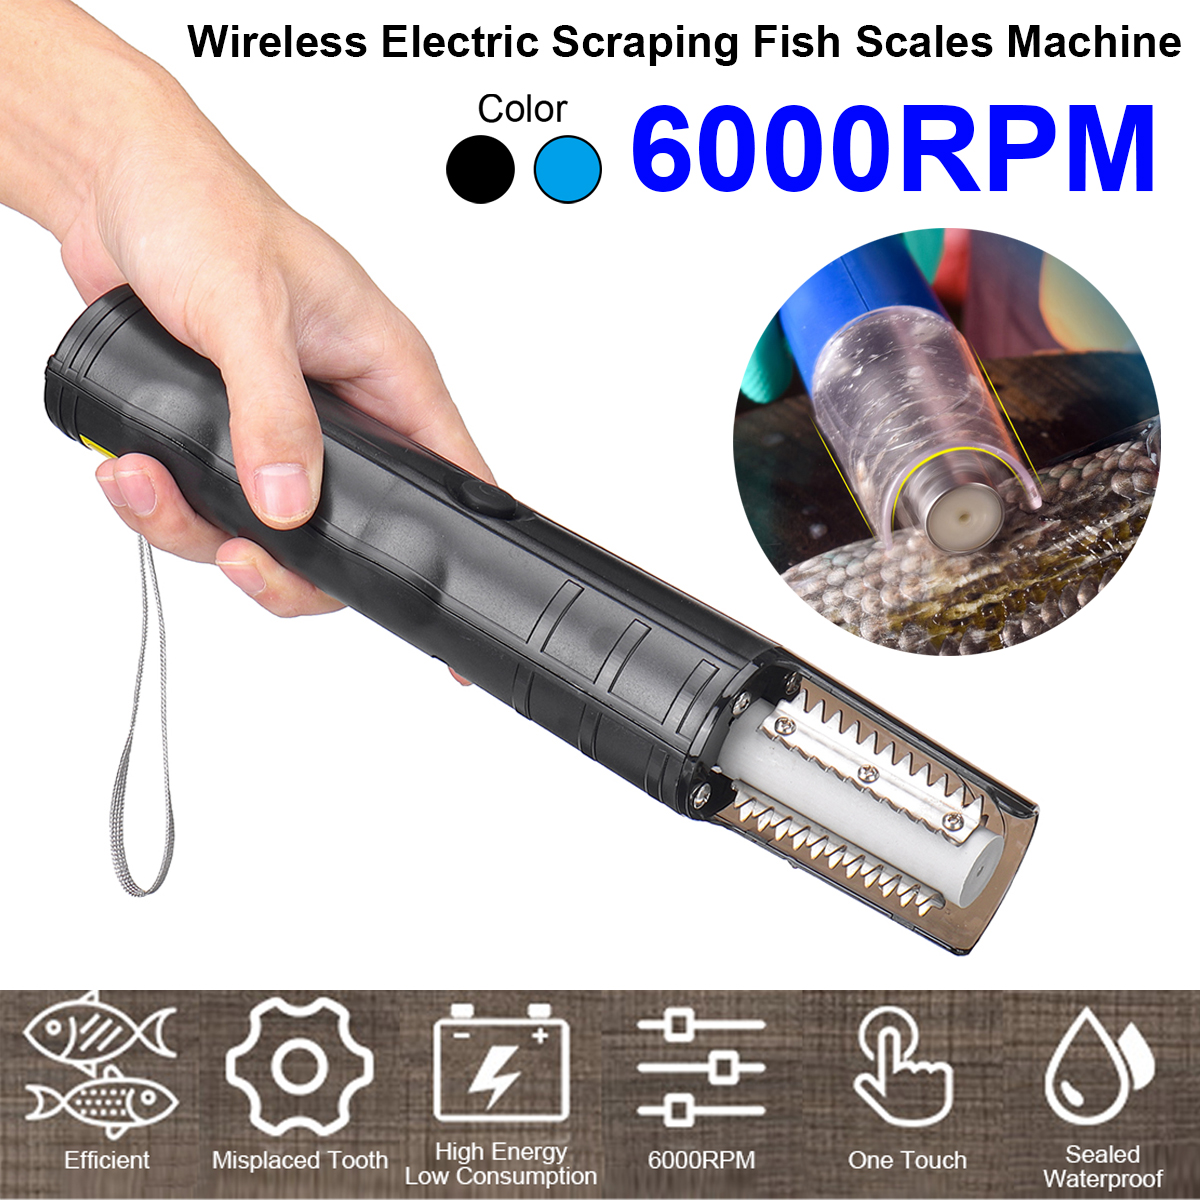 6000RPM-Wireless-Electric-Fish-Skin-Scale-Brush-Scraping-Remover-Peeler-Machine-1744029-2